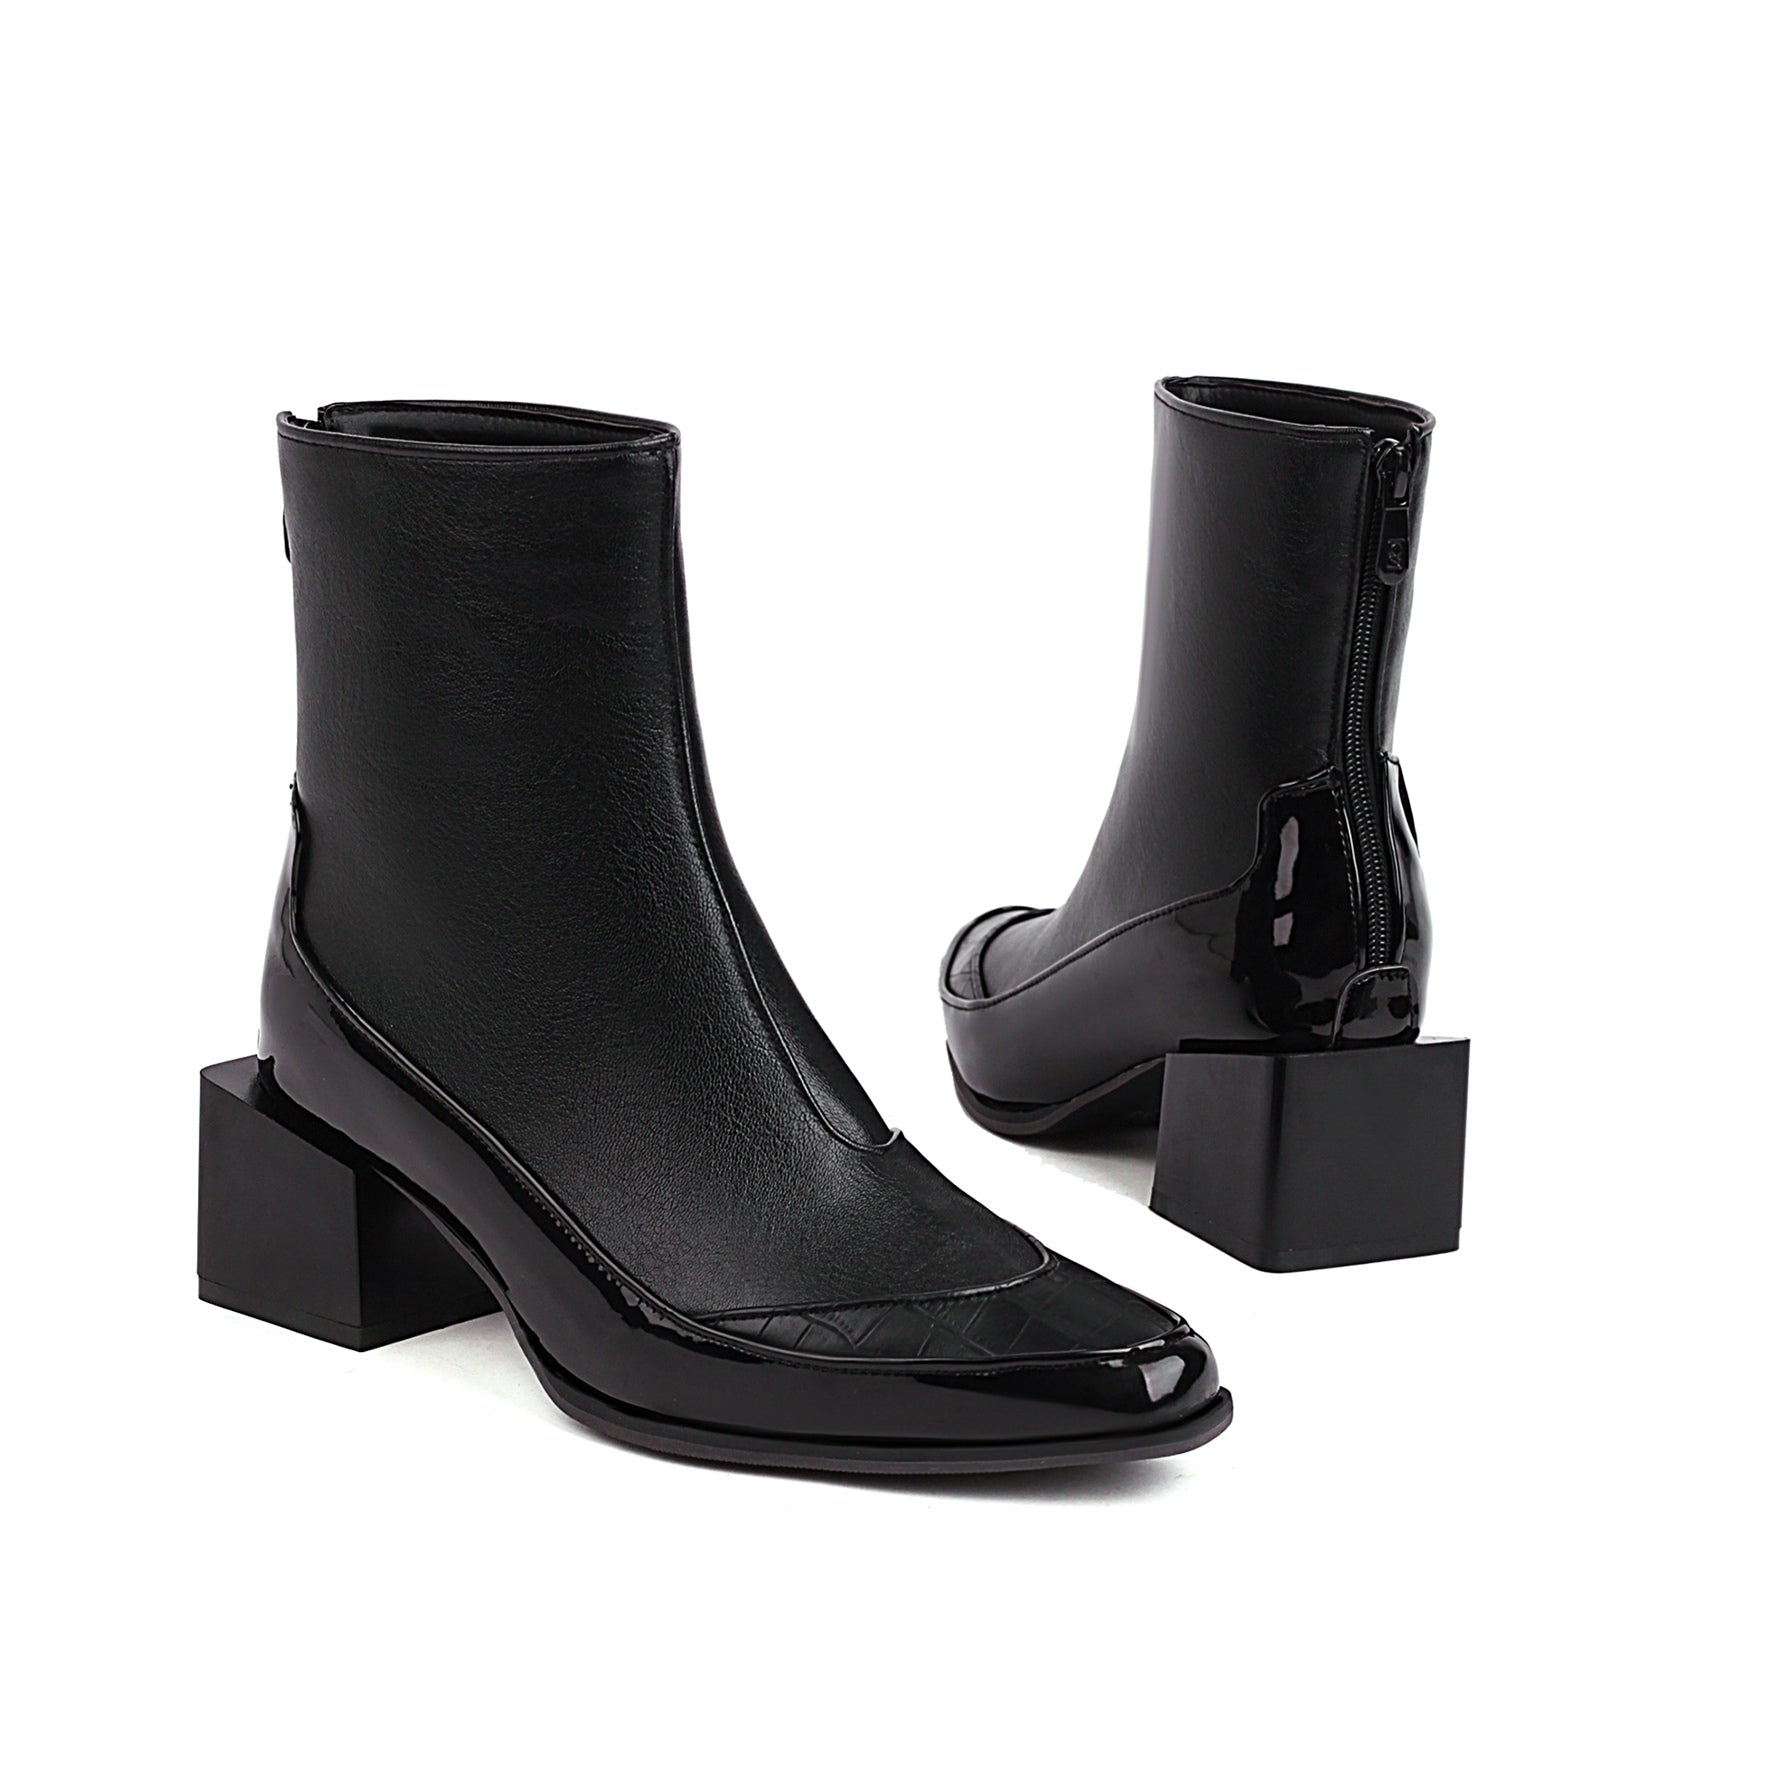 Bigsizeheels Square toe SIen back zipper ankle boots - Black freeshipping - bigsizeheel®-size5-size15 -All Plus Sizes Available!